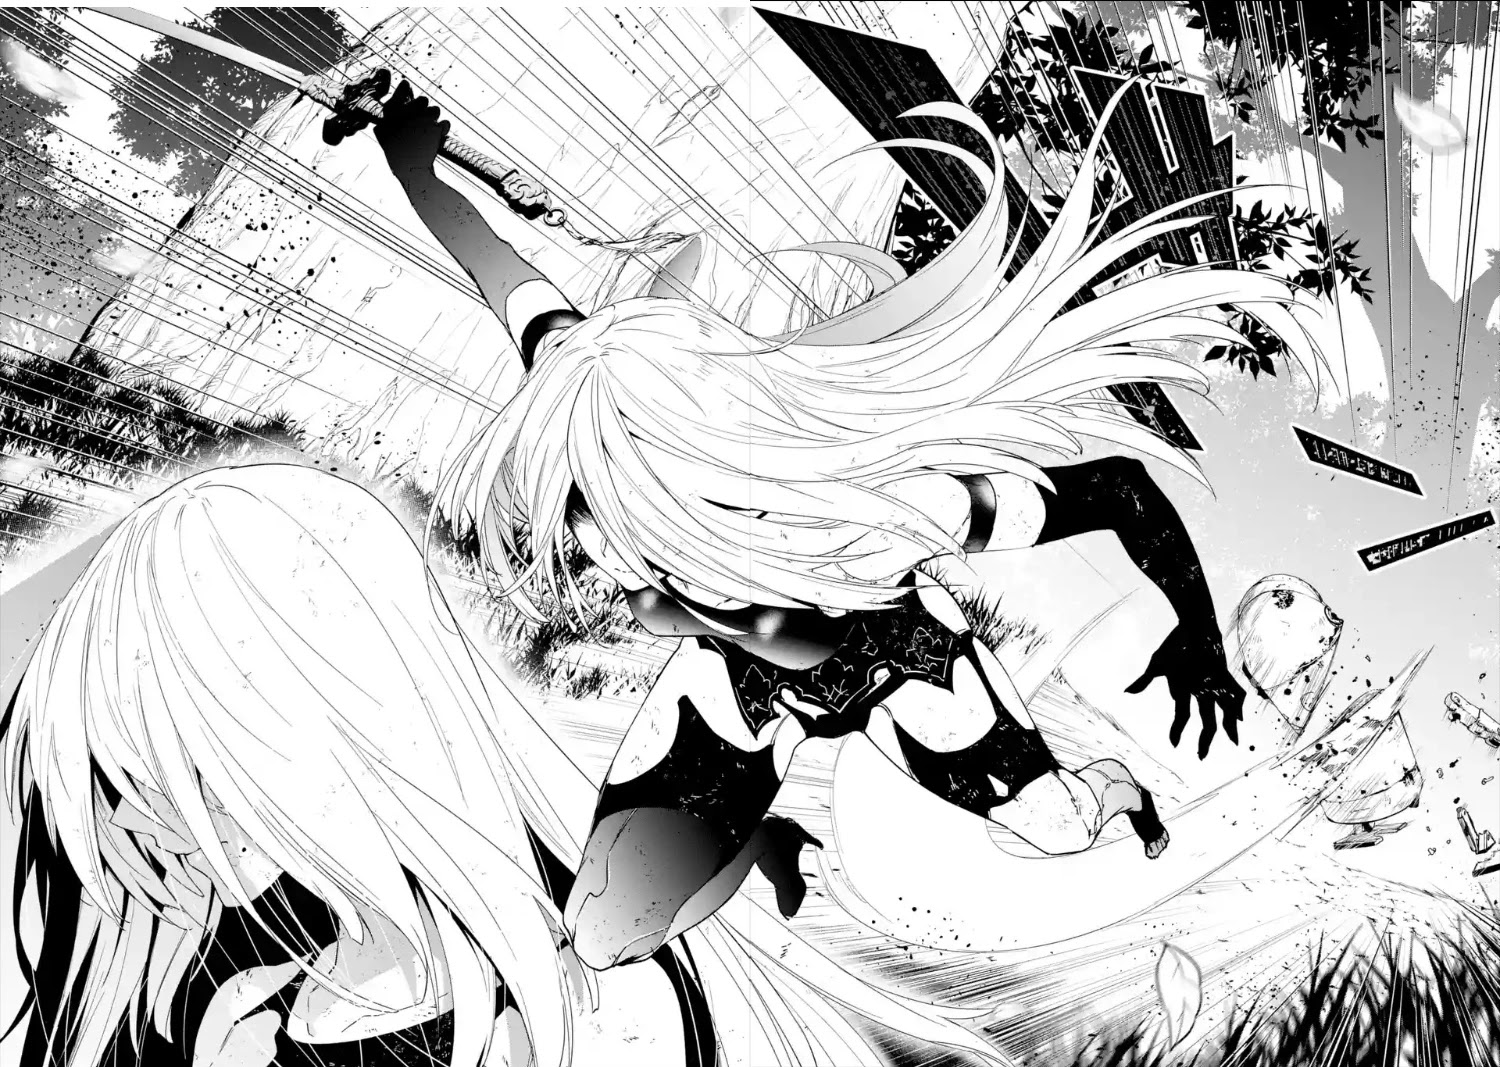 Large splash panel from the YoRHa manga, depicting A2 cutting through a machine.